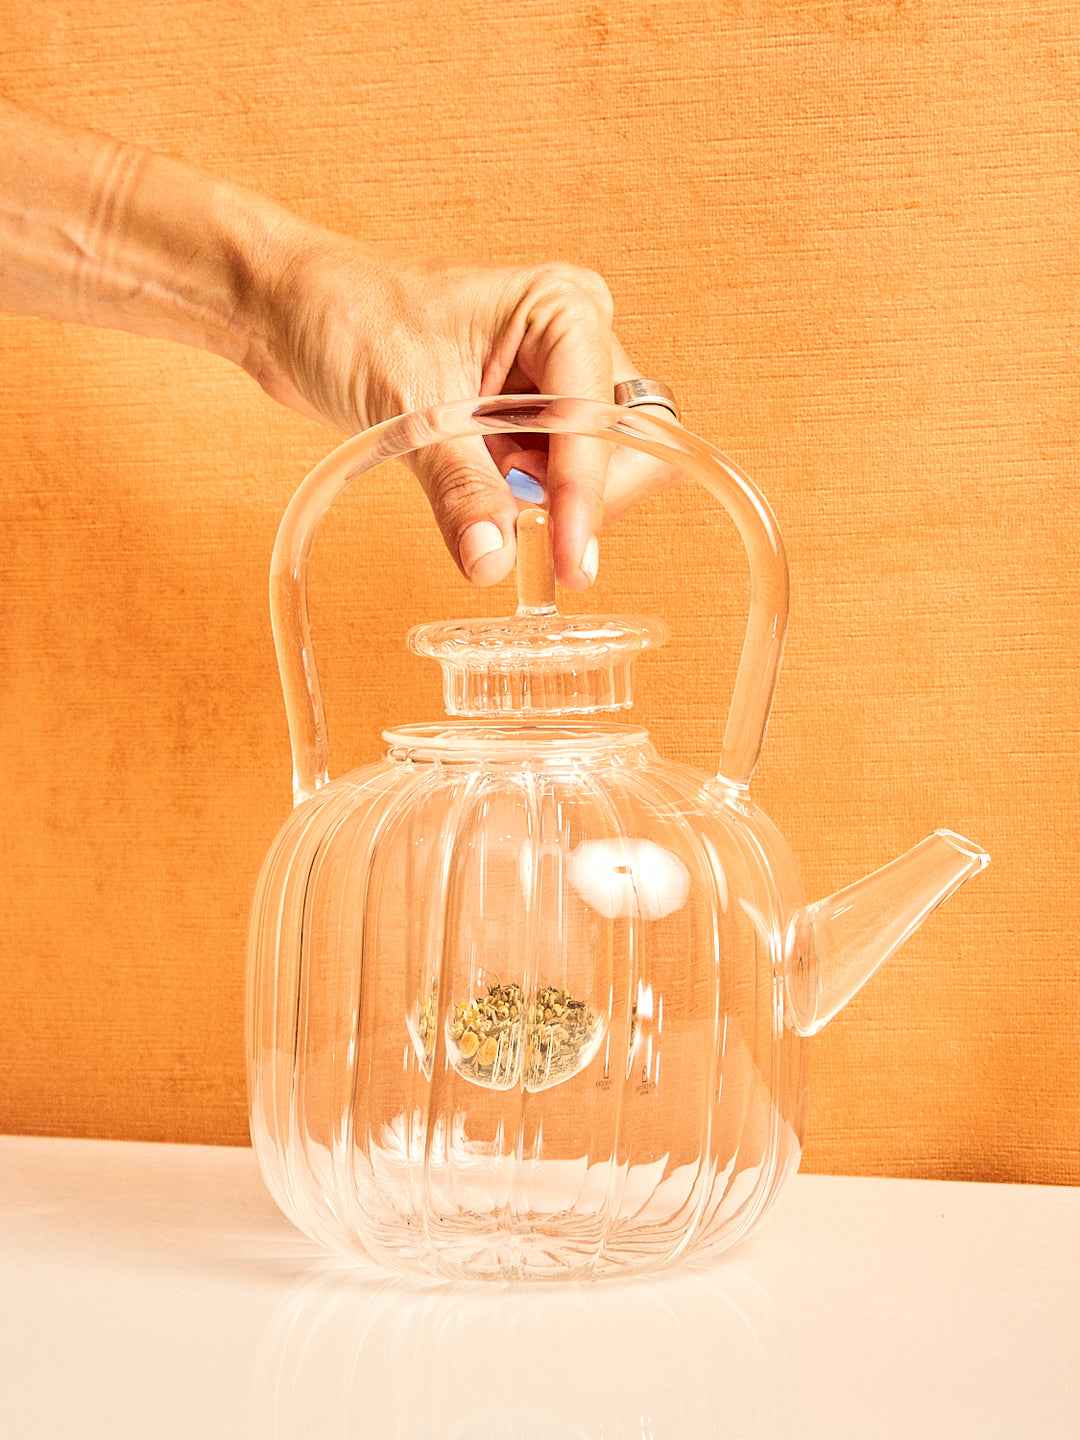 Menu Kettle Glass Teapot